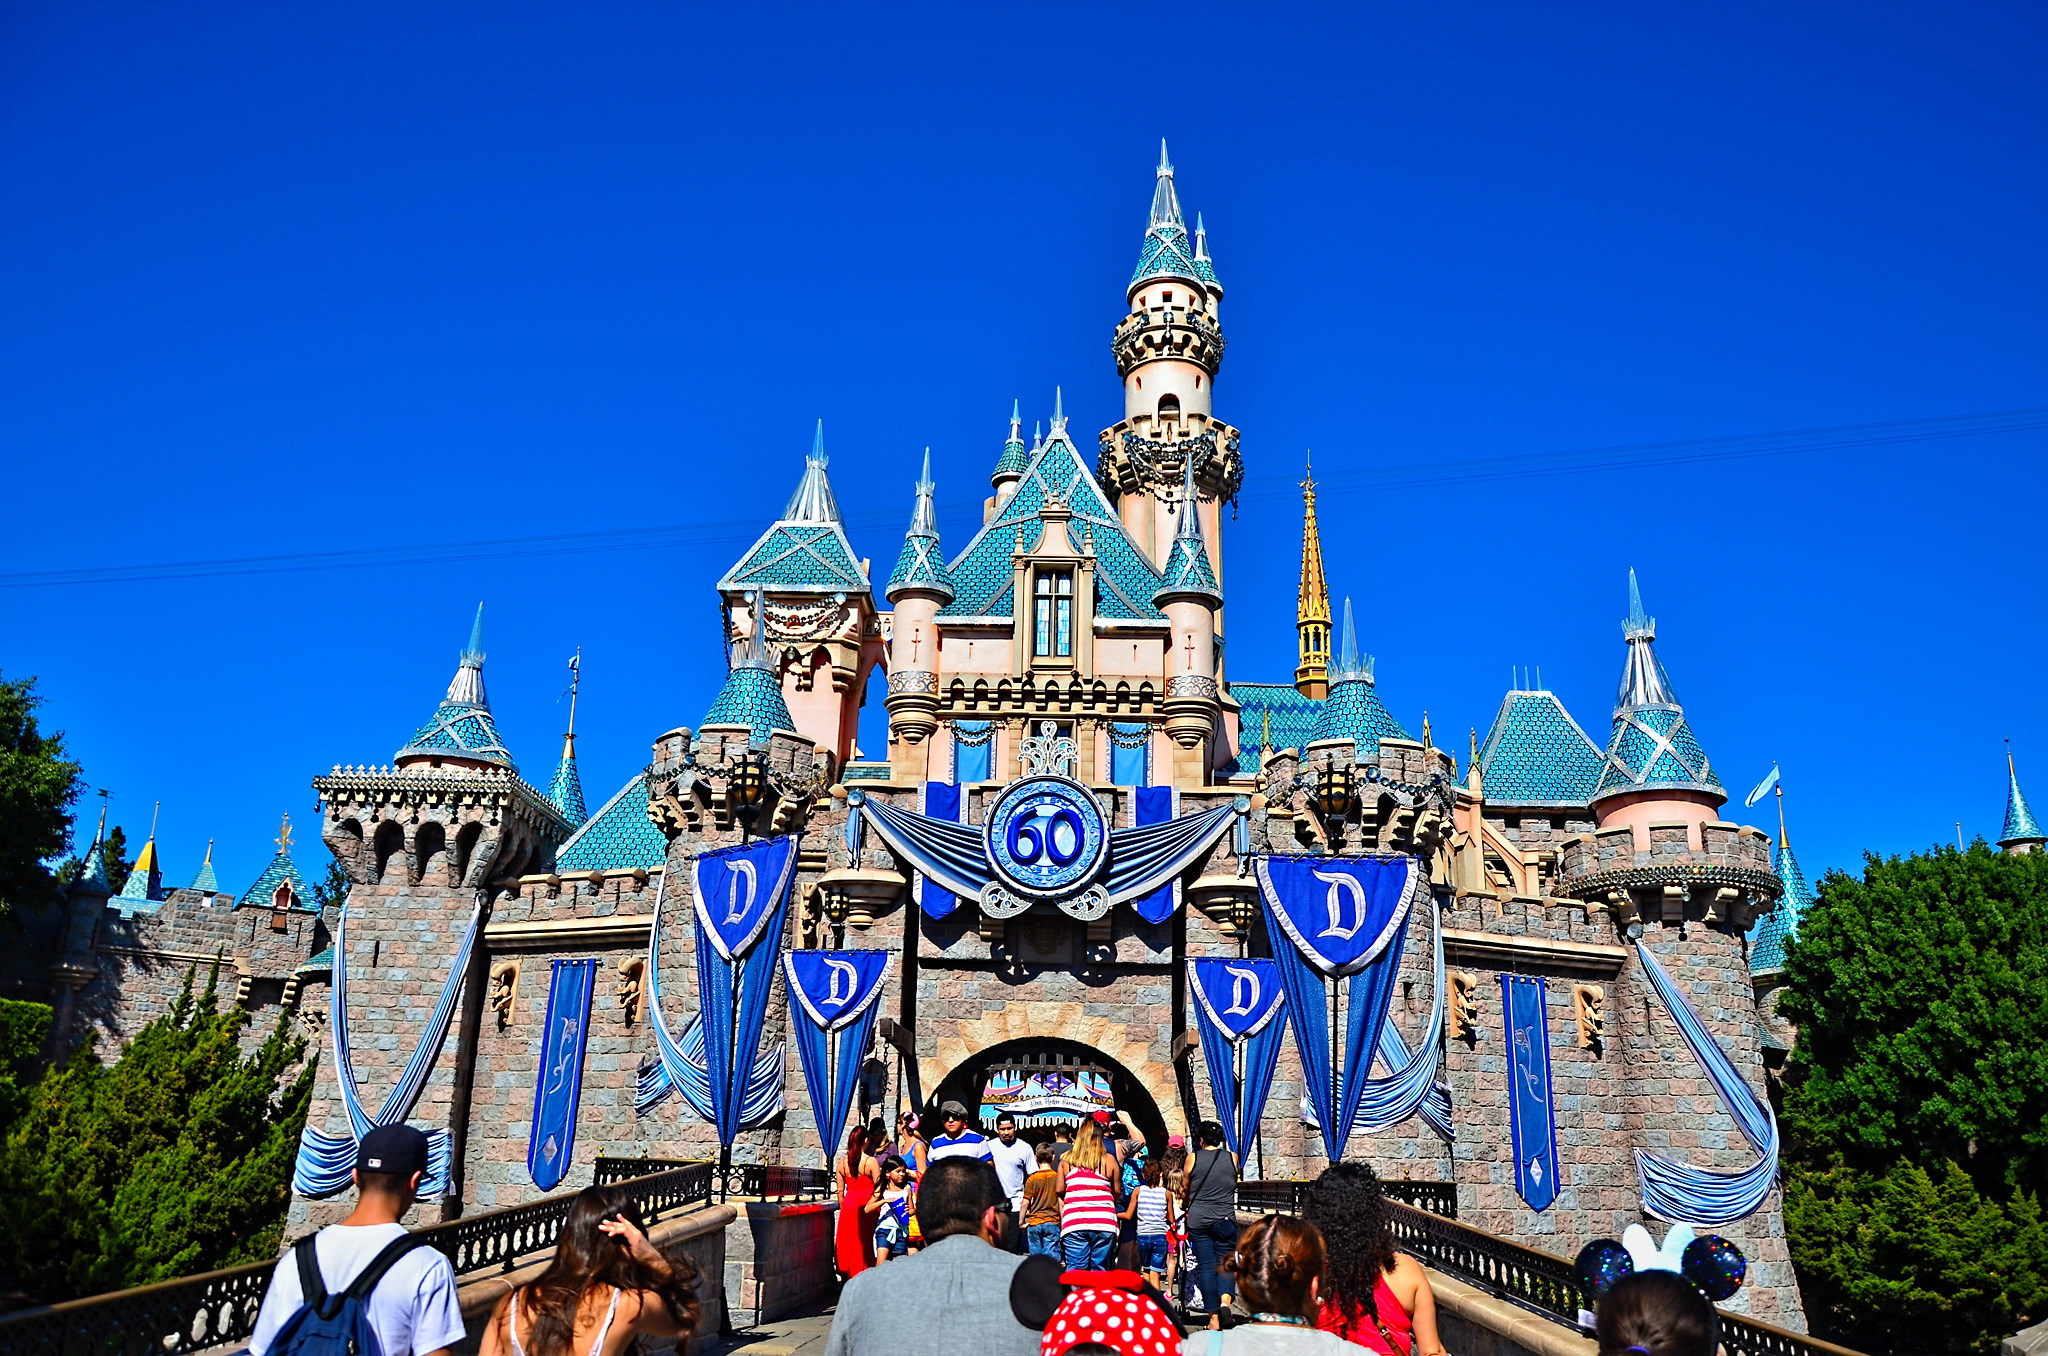 File:Disneyland in California marks its 60th anniversary